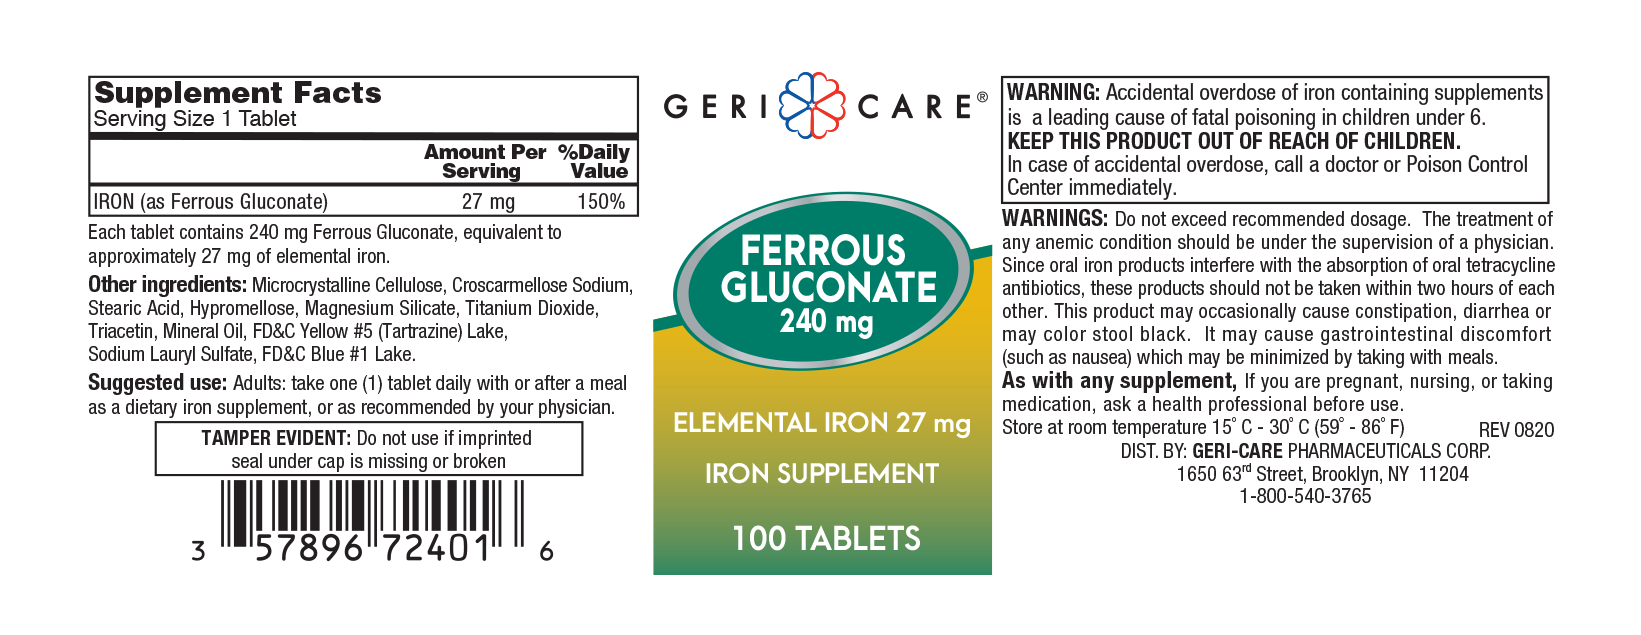 Gericare Ferrous Gluconate Iron Supplement, 240 mg., 100 Tablets, 724-01-GCP, 1 Bottle